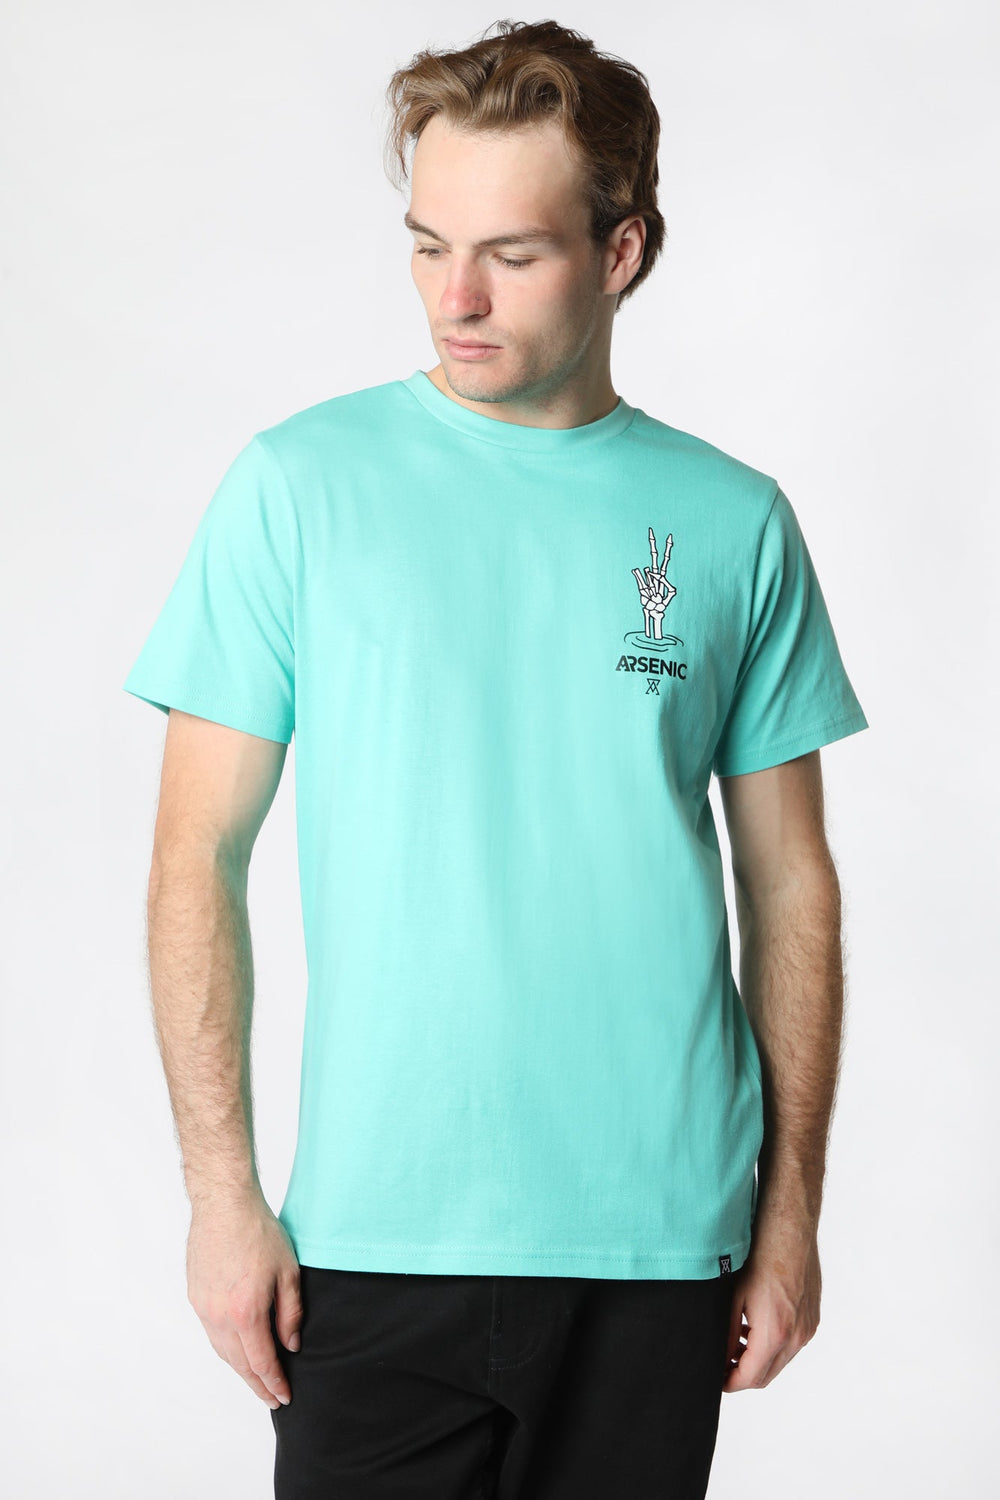 T-Shirt Imprimé Sink Or Swim Arsenic Homme Turquoise